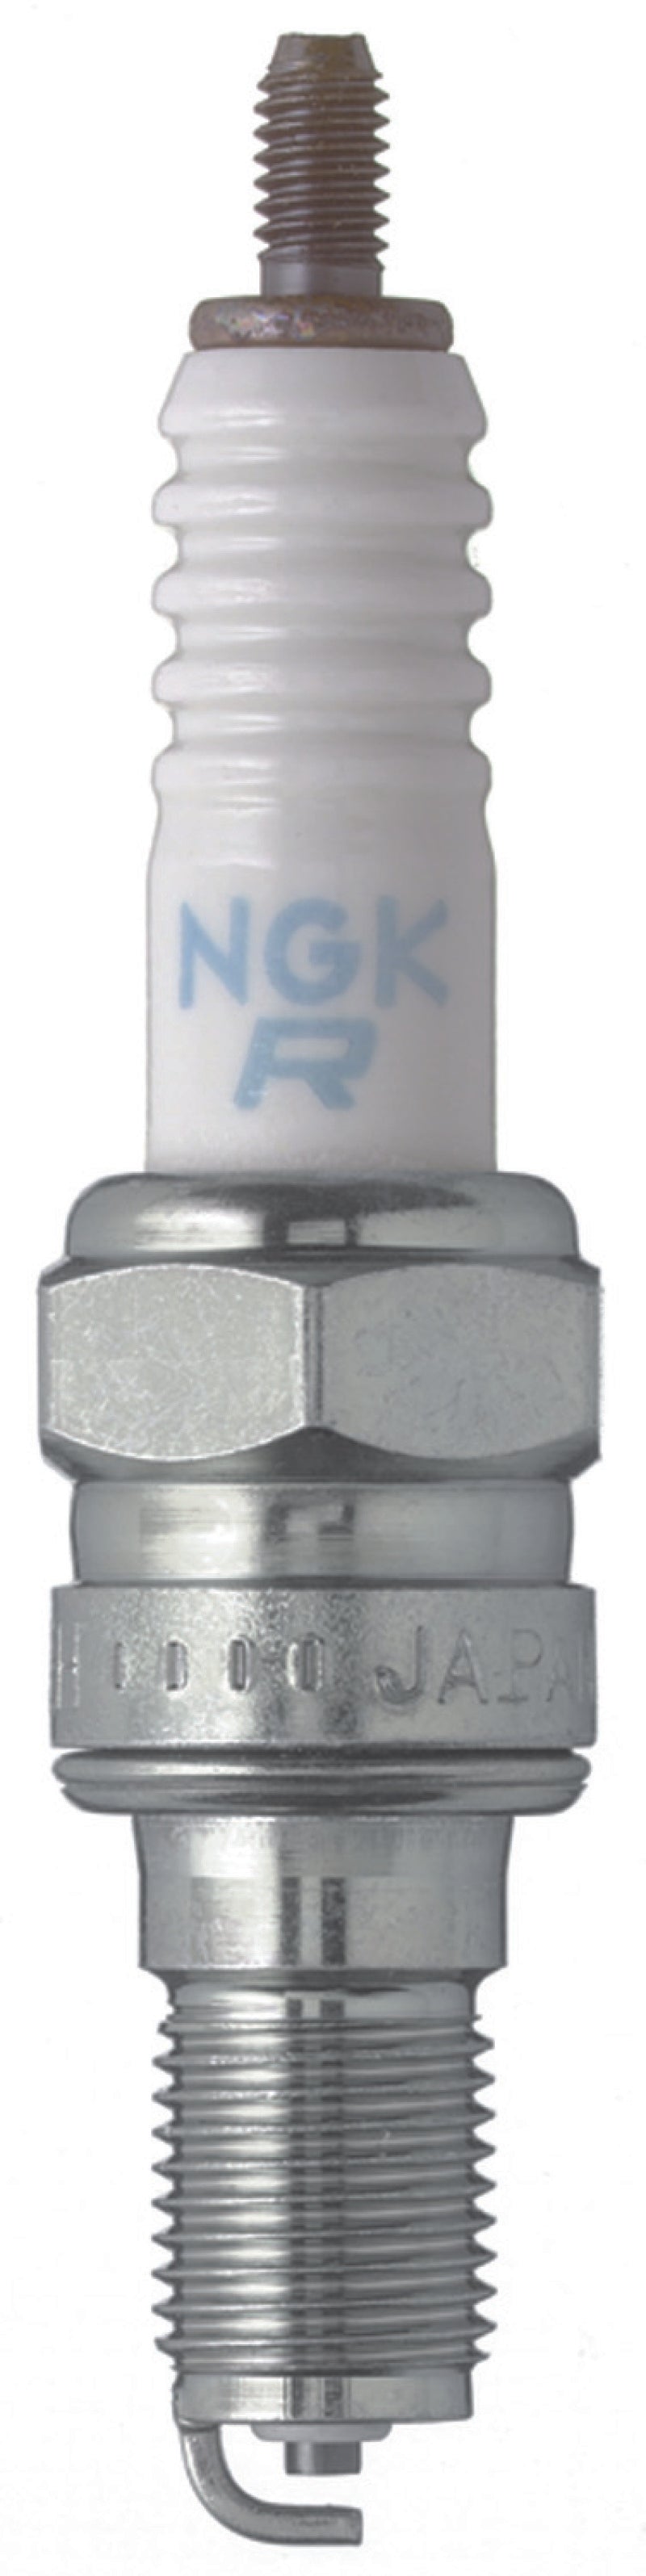 NGK Standard Spark Plug Box of 10 (CR5EH-9)